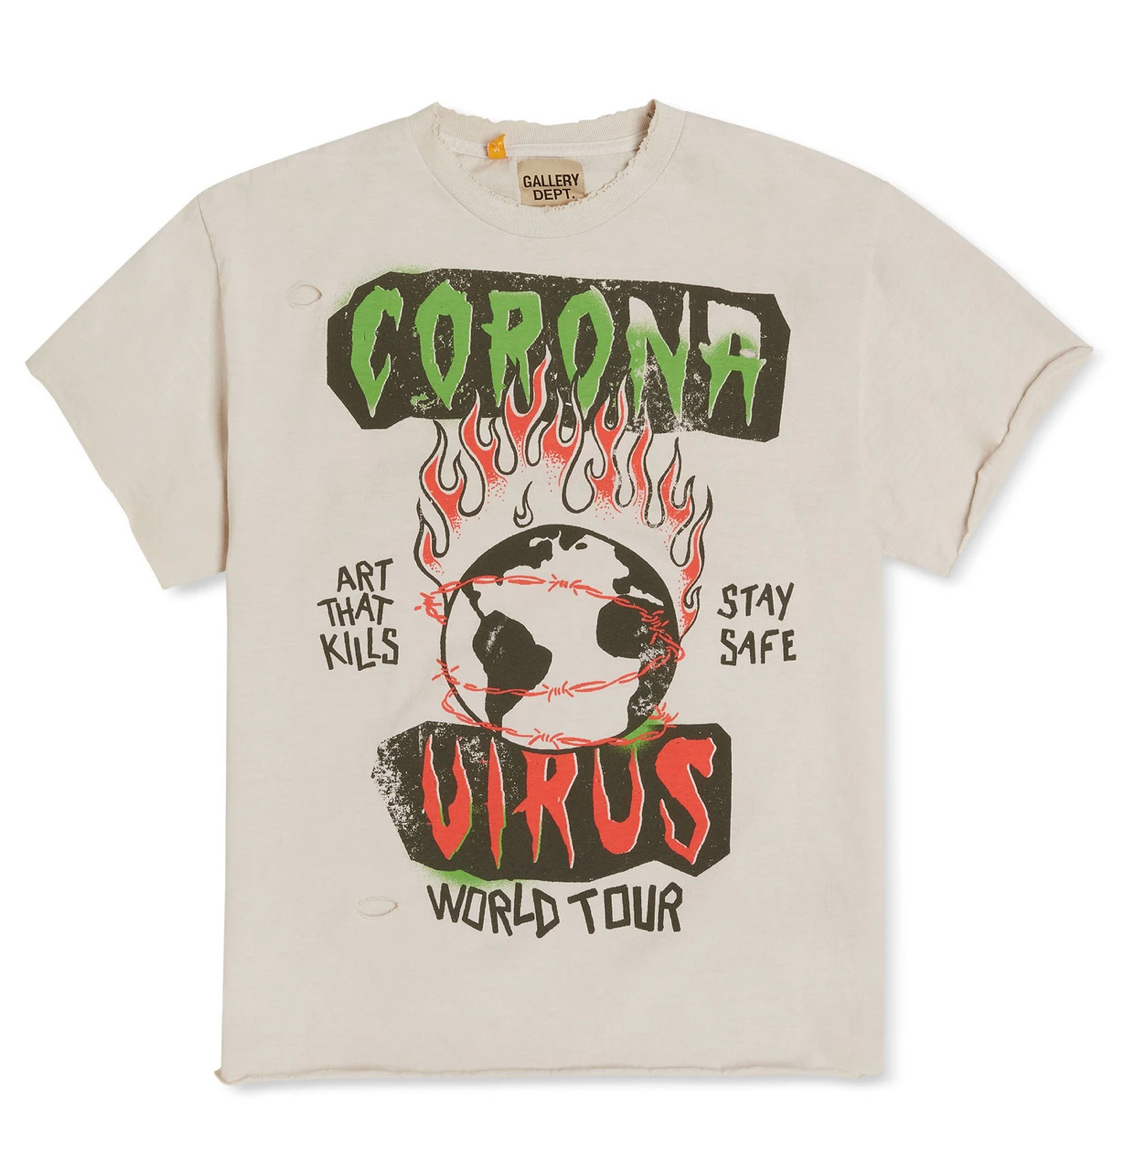 Gallery Dept. ATK Corona Tour T-shirt White Men's - US